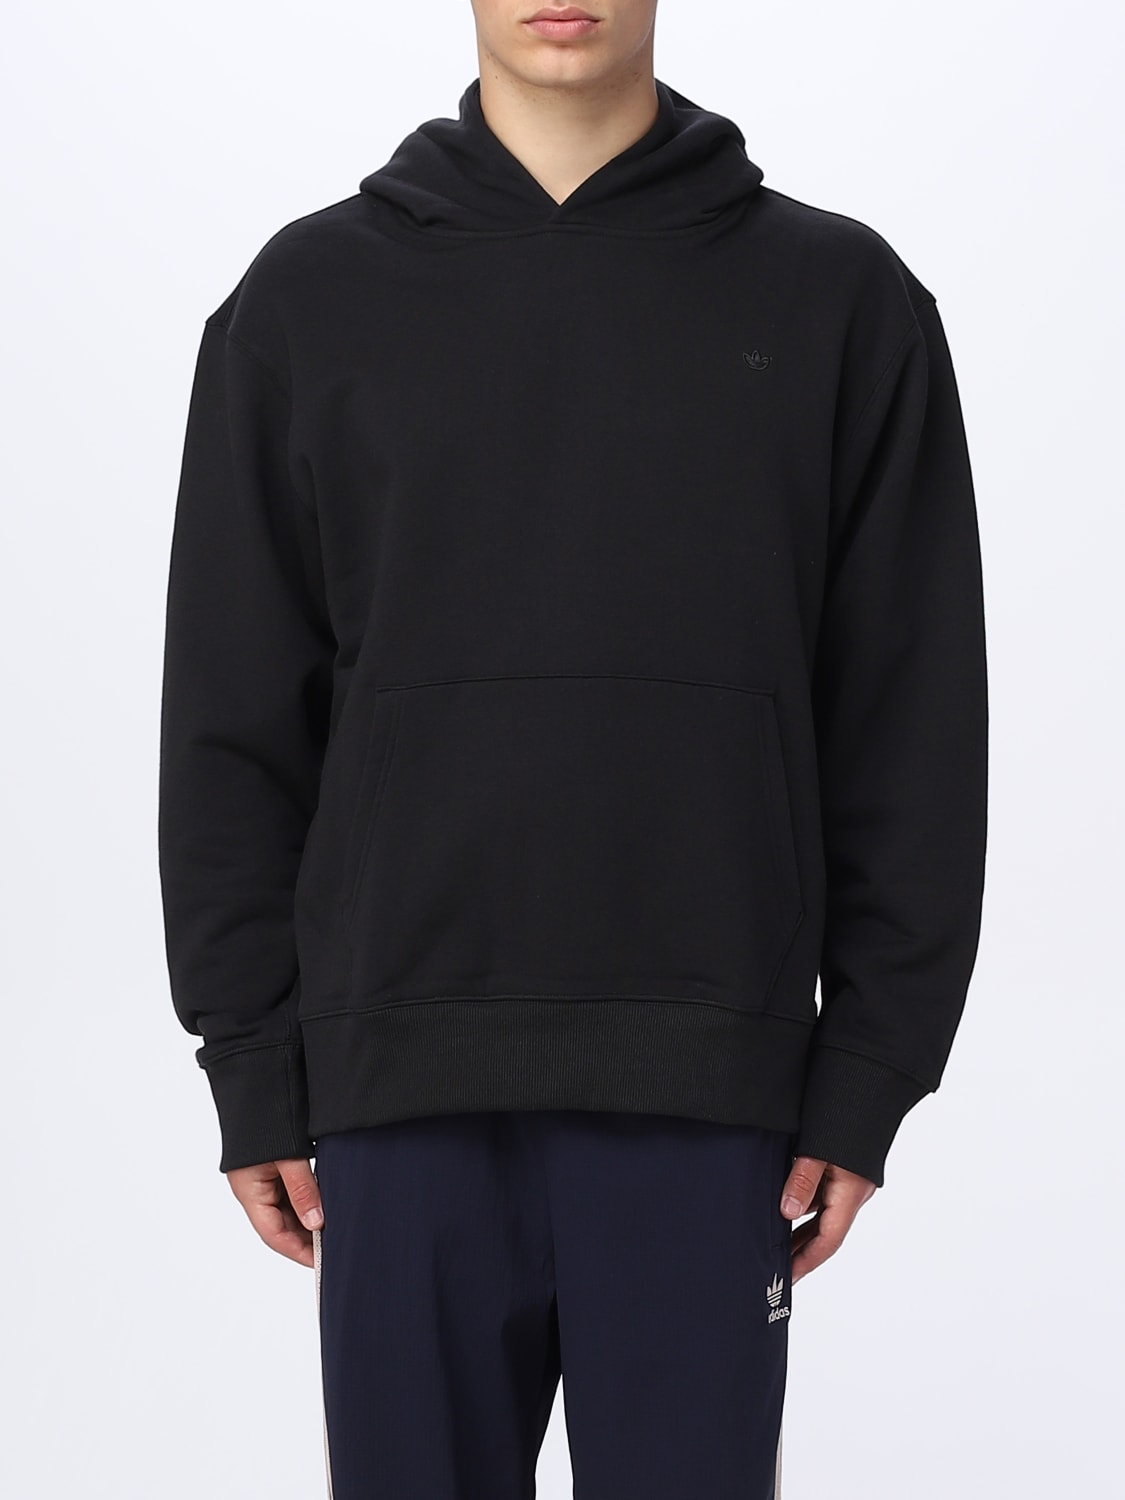 ADIDAS ORIGINALS: Originals cotton at | sweatshirt online sweatshirt HK2937 Black in - Adidas